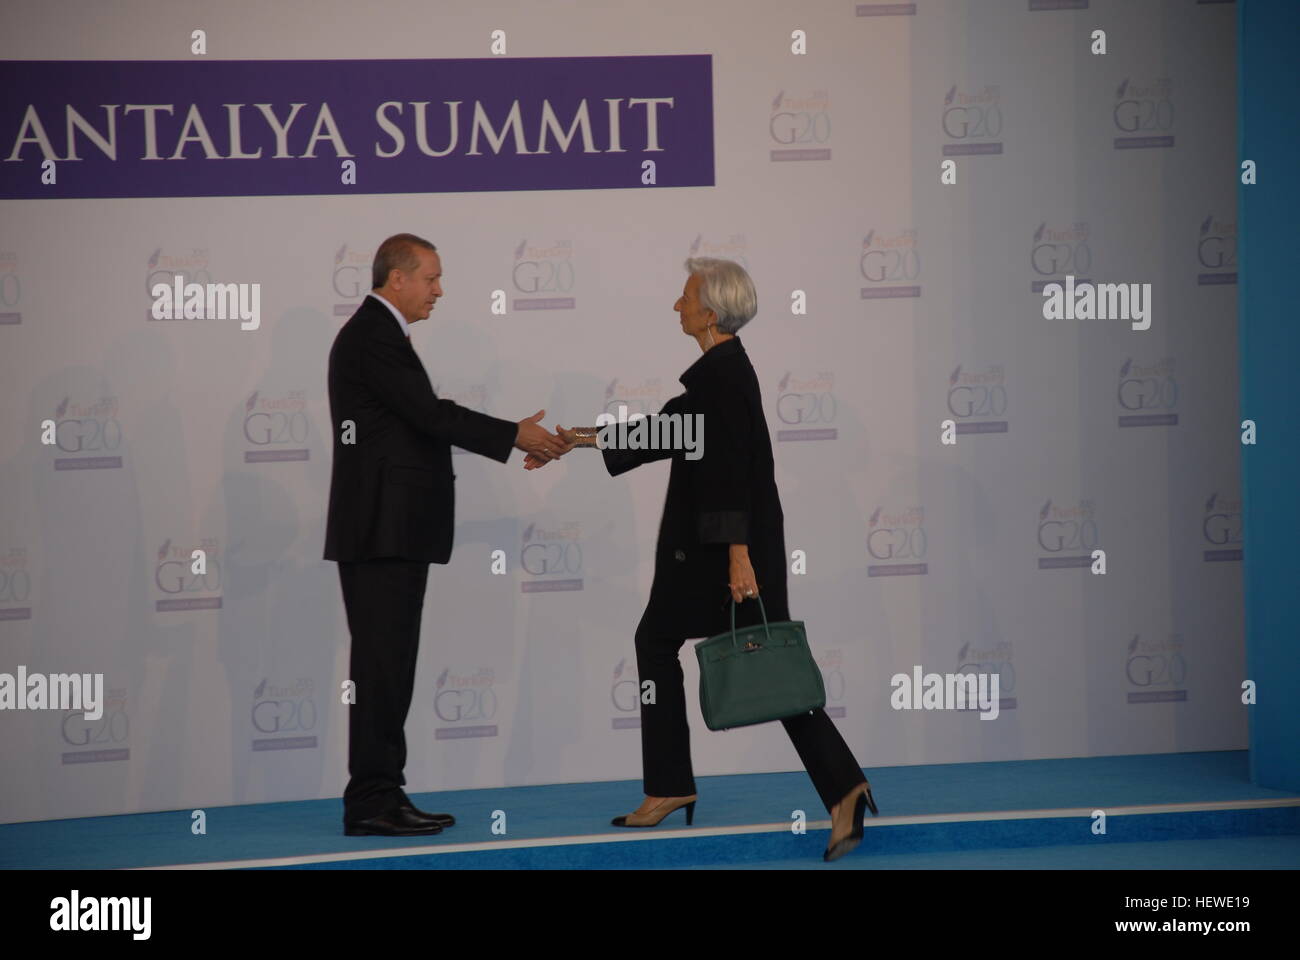 Turkish President Recep Tayyip Erdogan greets Christine Lagarde, Managing Director of the IMF at the G20 summit. Stock Photo